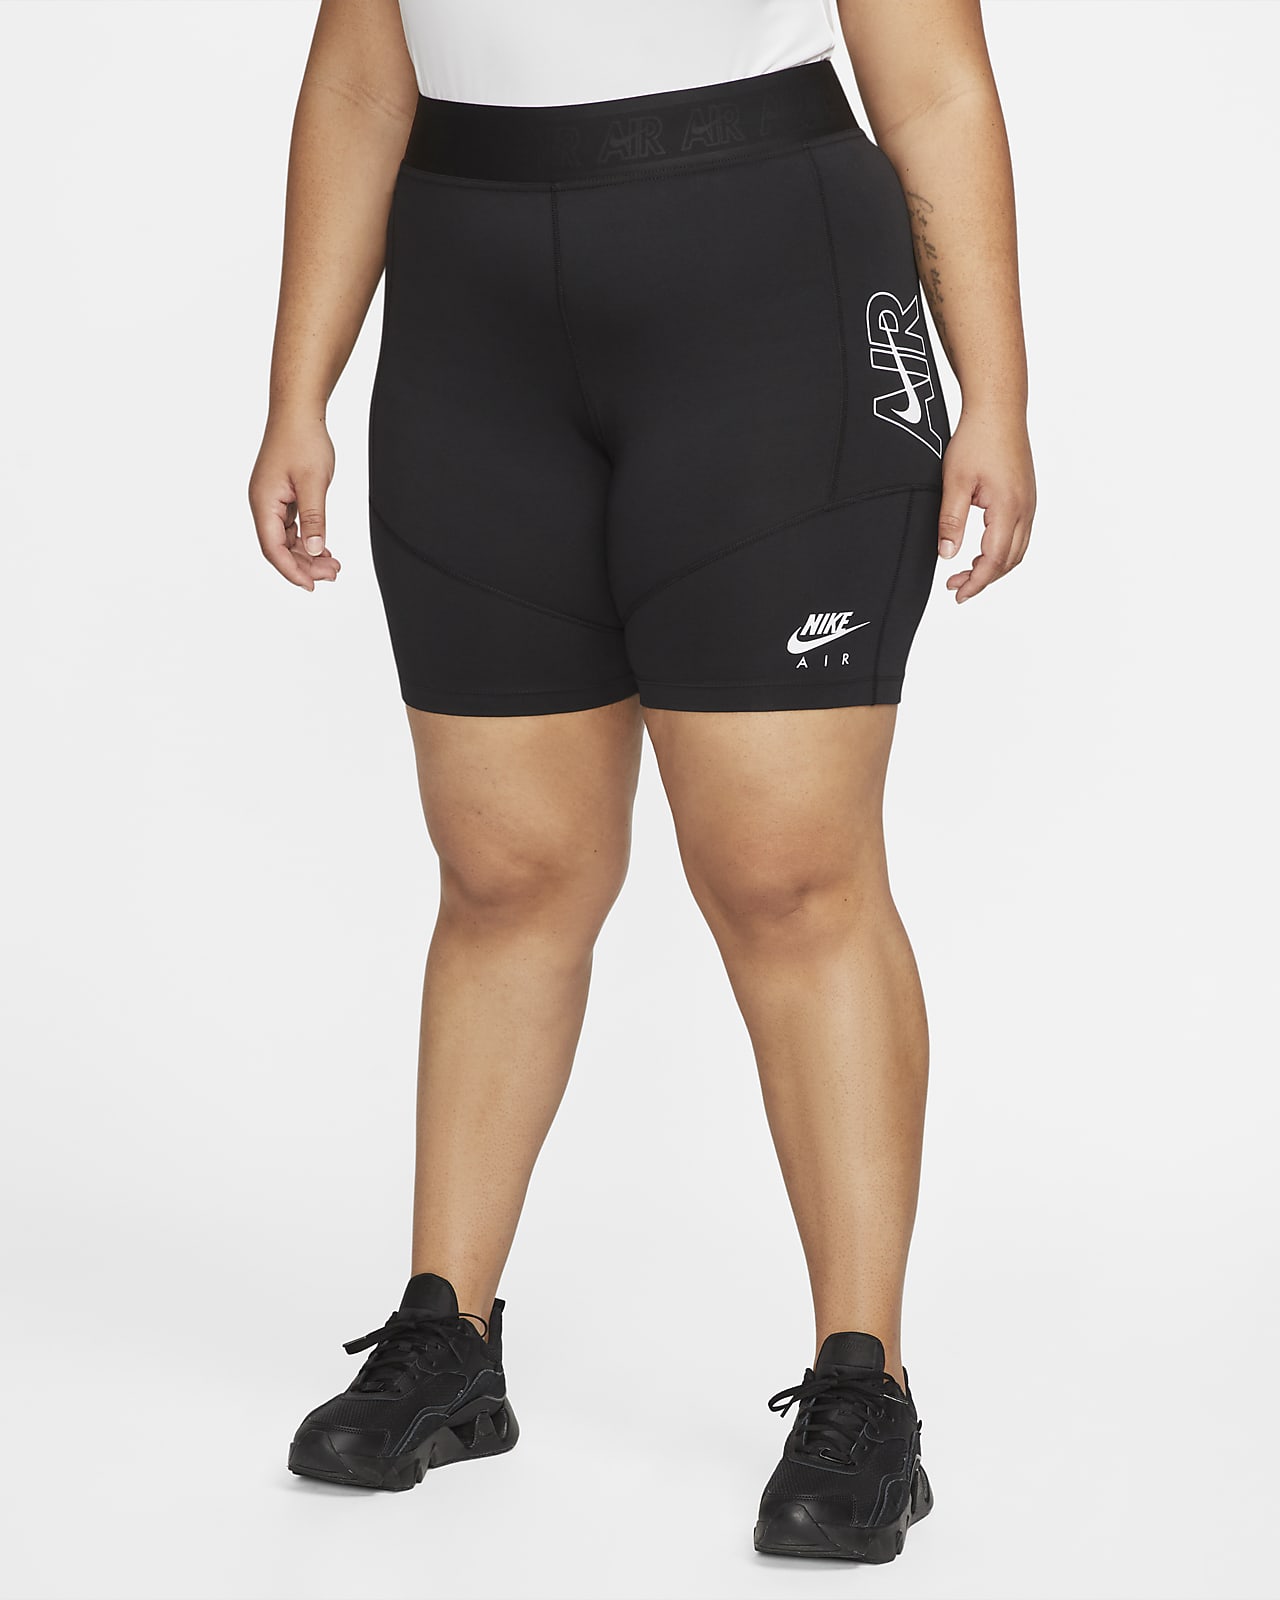 átomo recursos humanos Eléctrico Nike Air Women's Bike Shorts (Plus Size). Nike.com